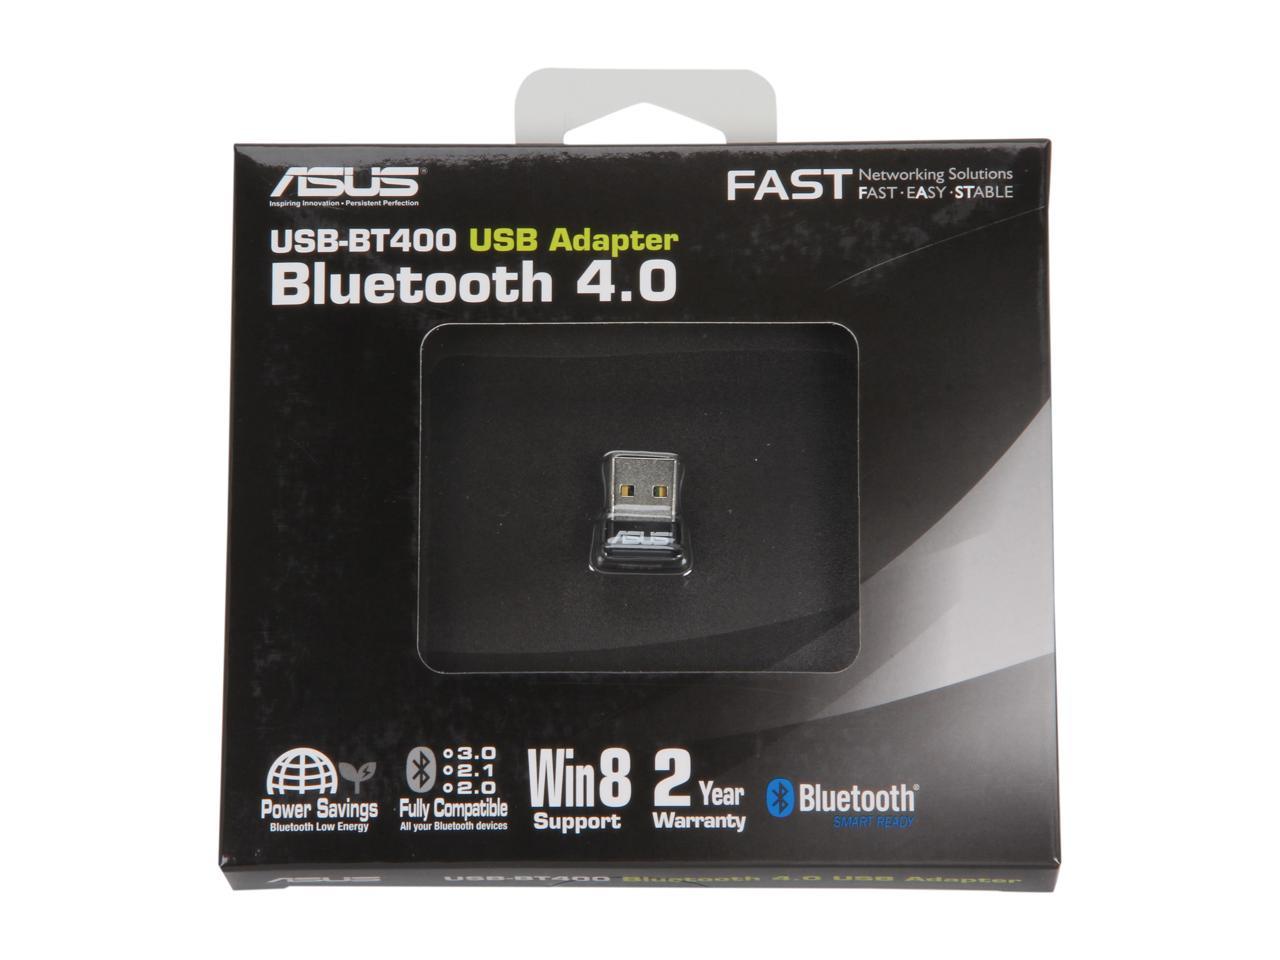 Asus Usb-Bt400 Bluetooth 4.0 Usb Adapter